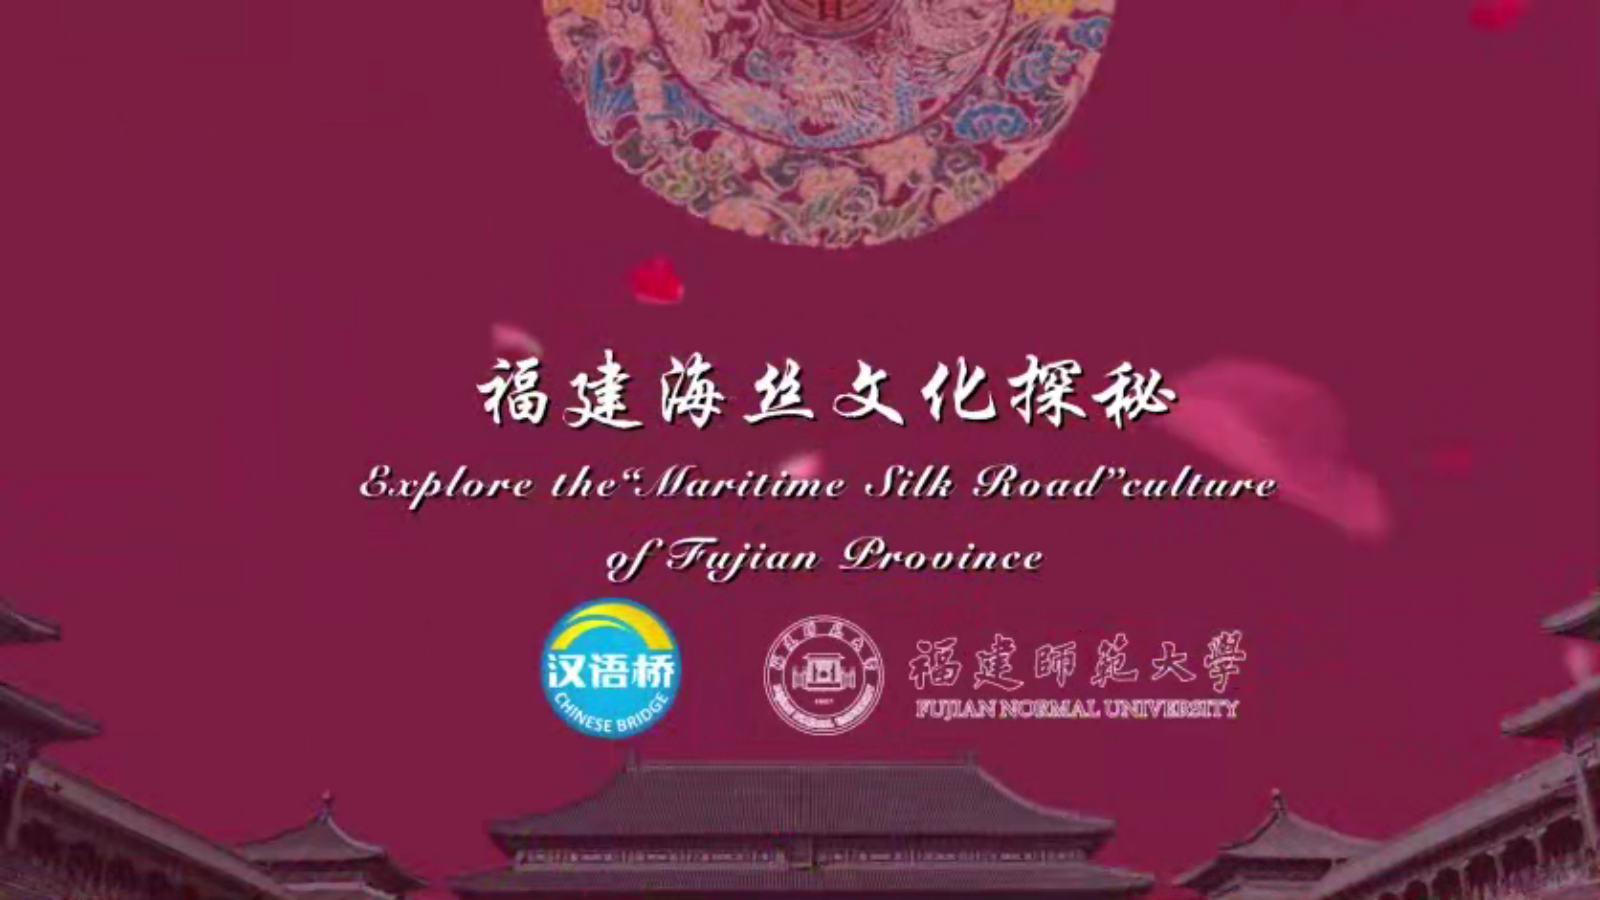 Maritime Silk Road Culture in Fujian